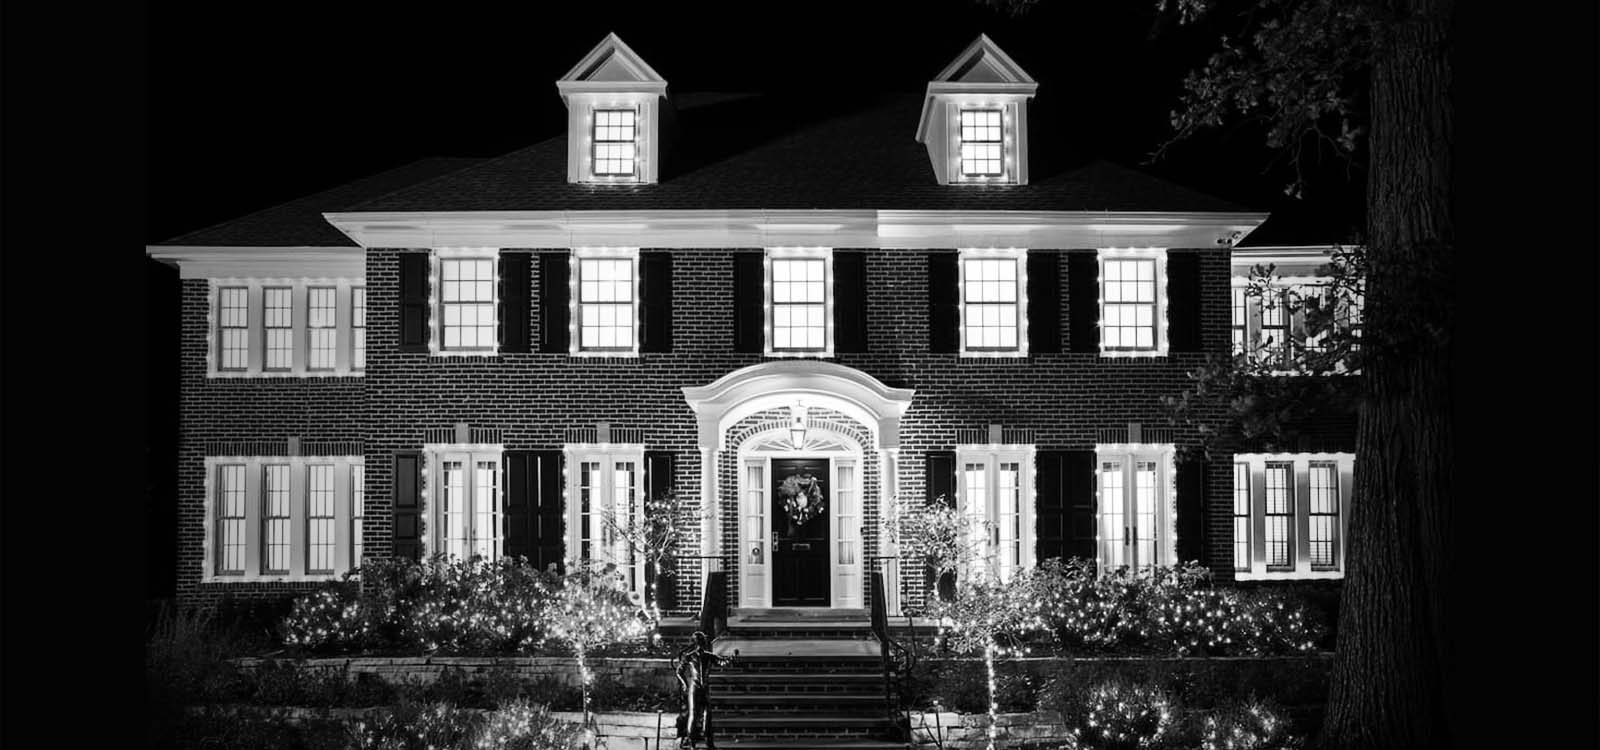 Home Alone: Το σπίτι των McCallister νοικιάζεται για μια νύχτα - xωρίς ληστές αυτή τη φορά